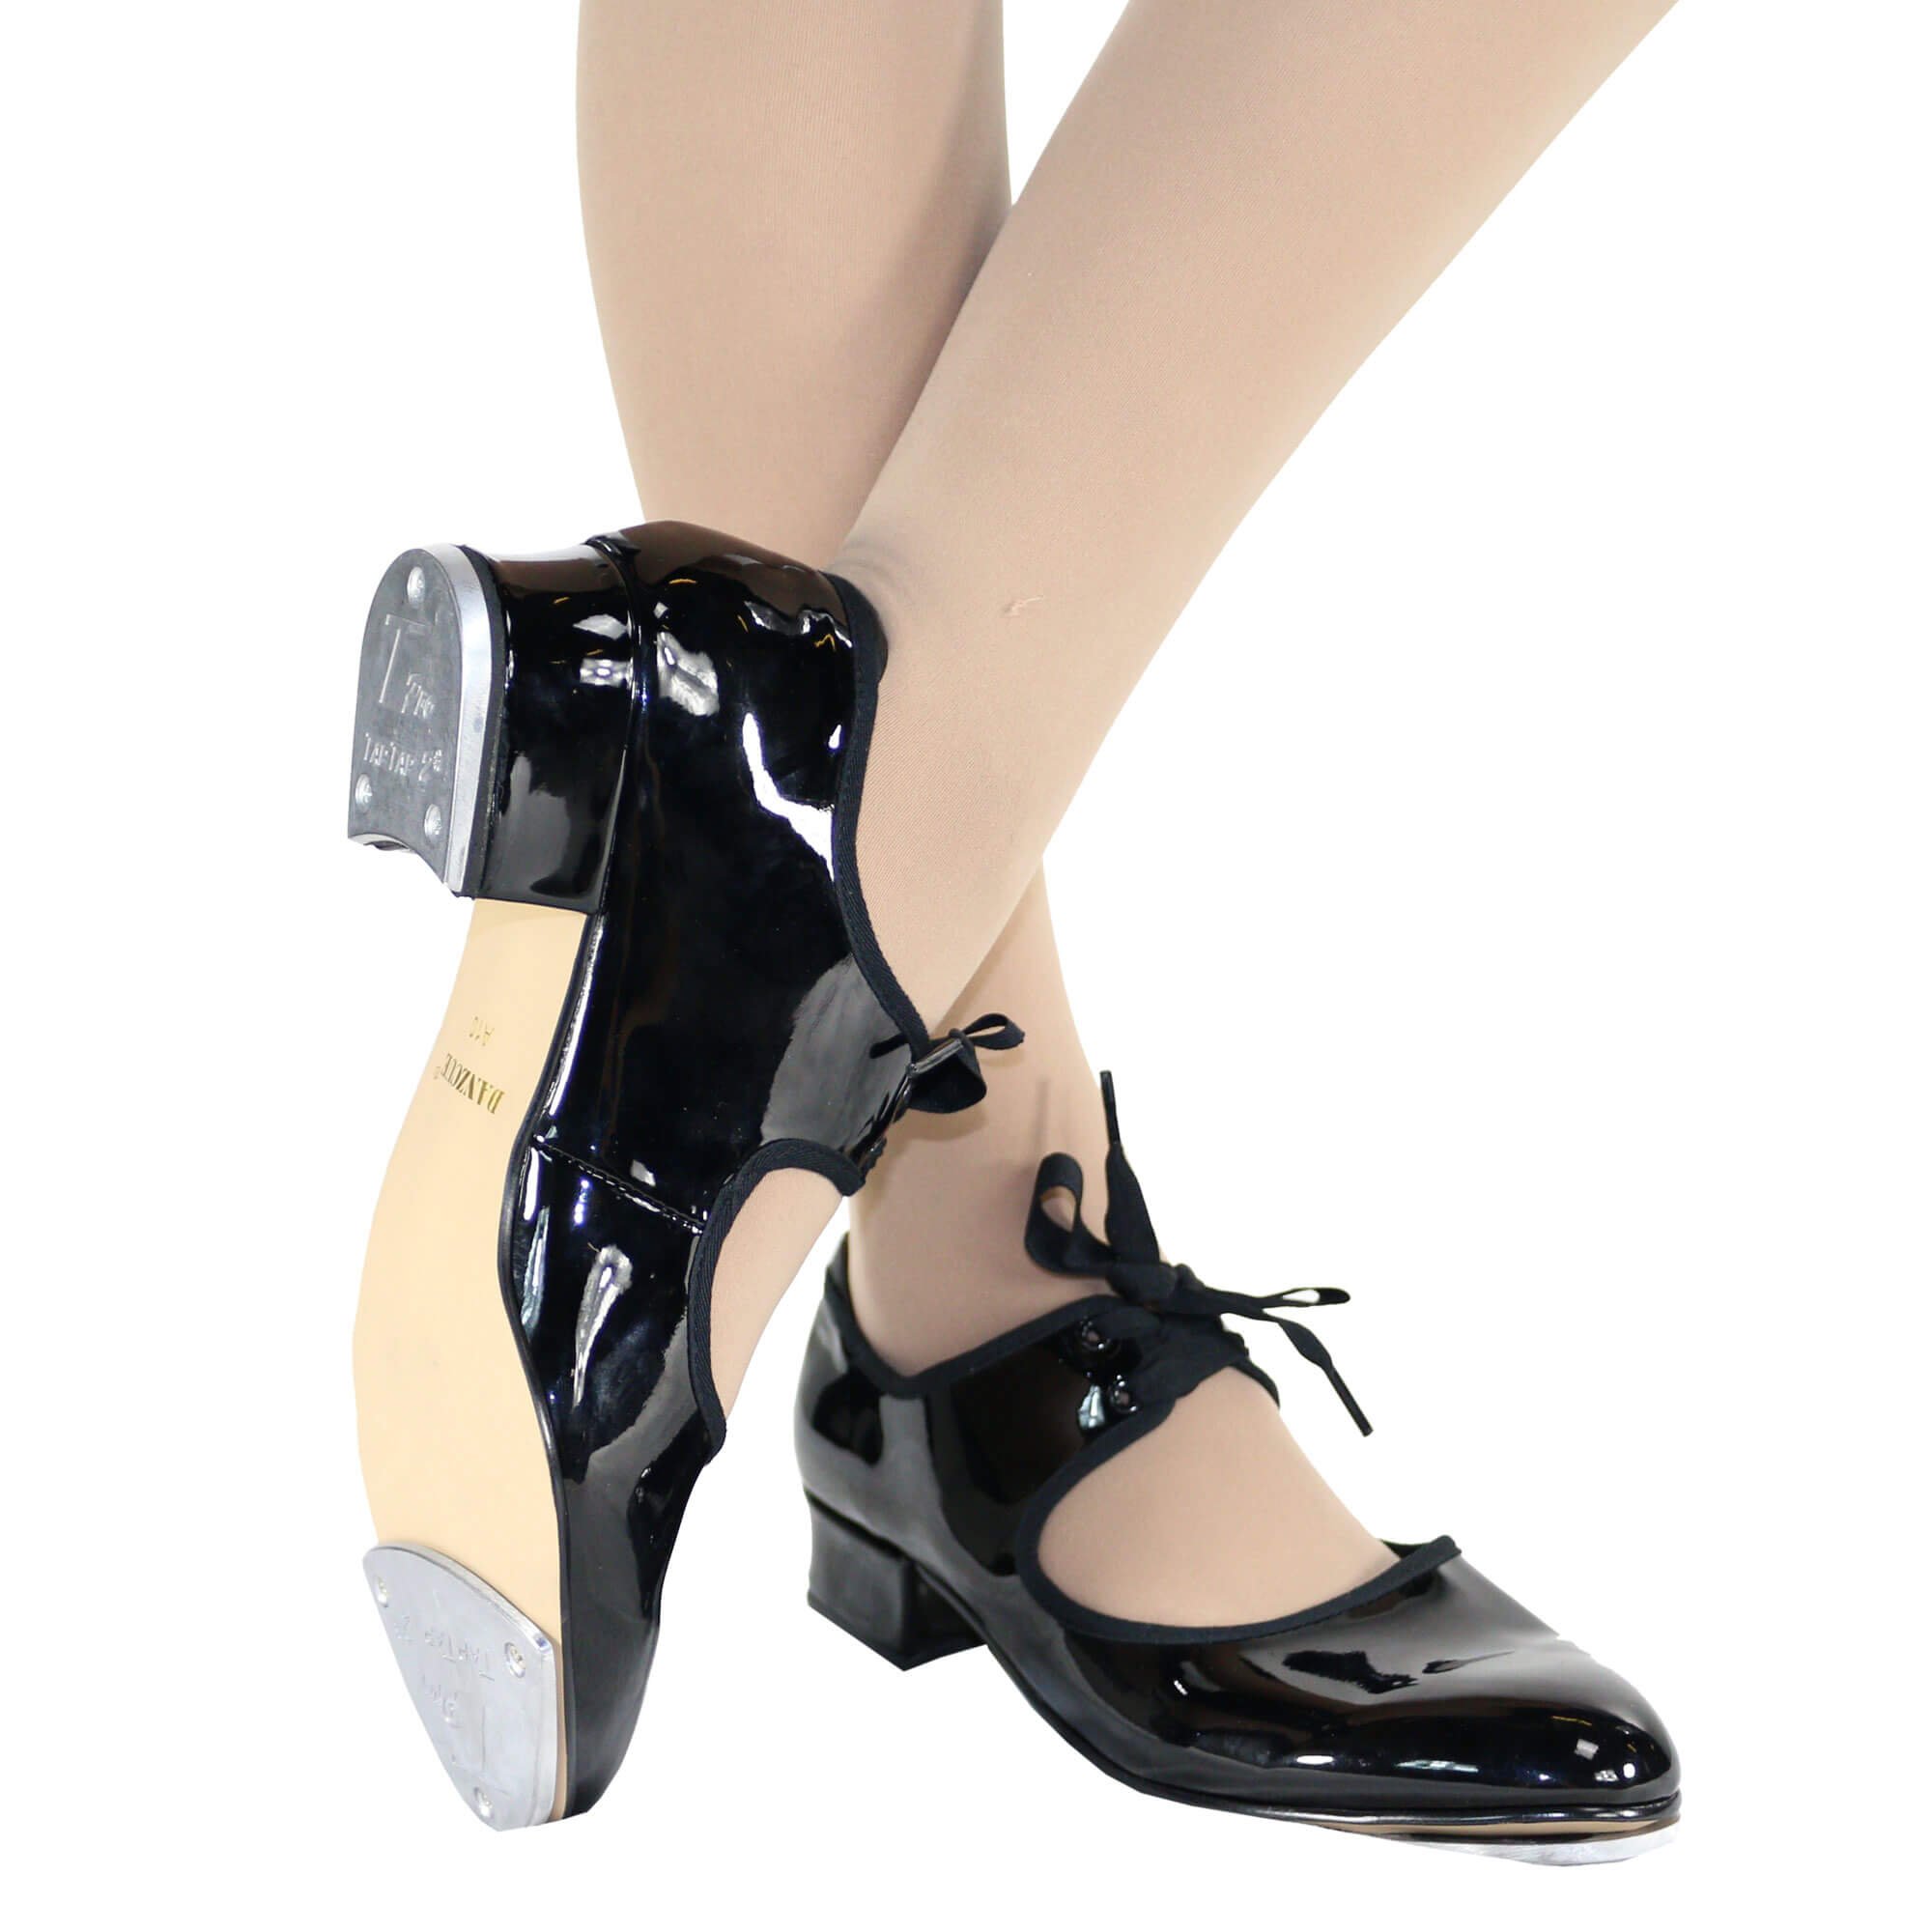 Danzcue Child Patent Flexible Tap Shoes - Click Image to Close